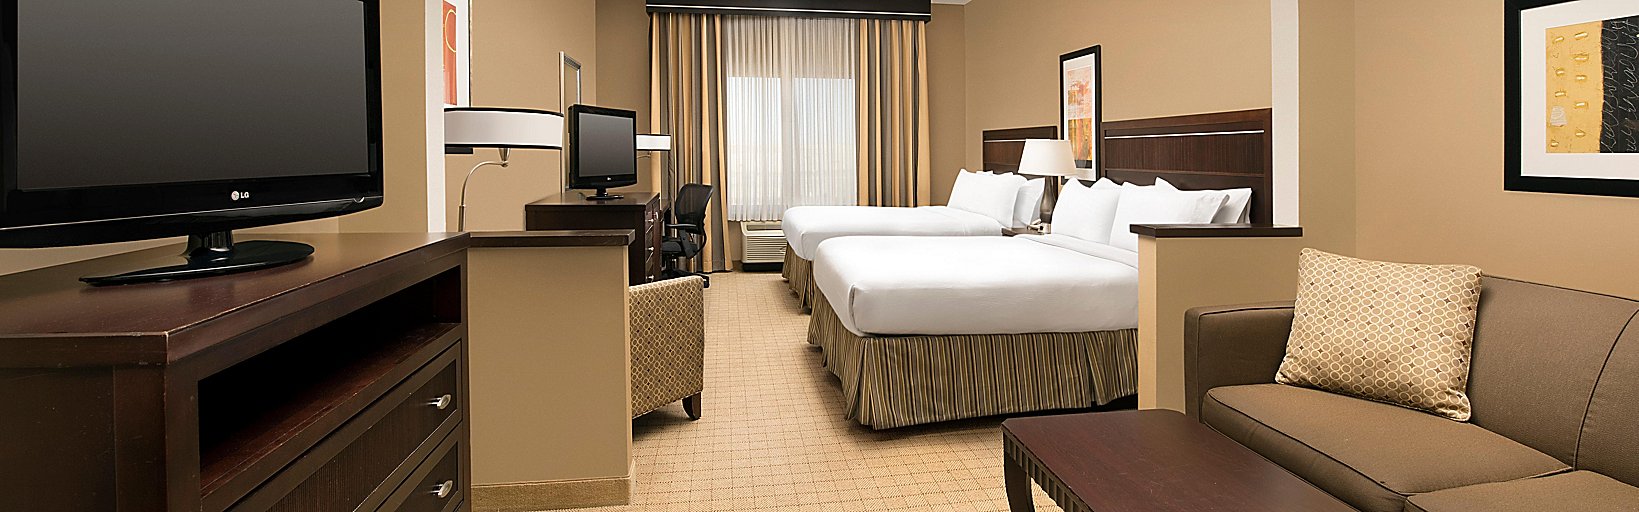 Holiday Inn Denver Hotels Holiday Inn Hotel Suites